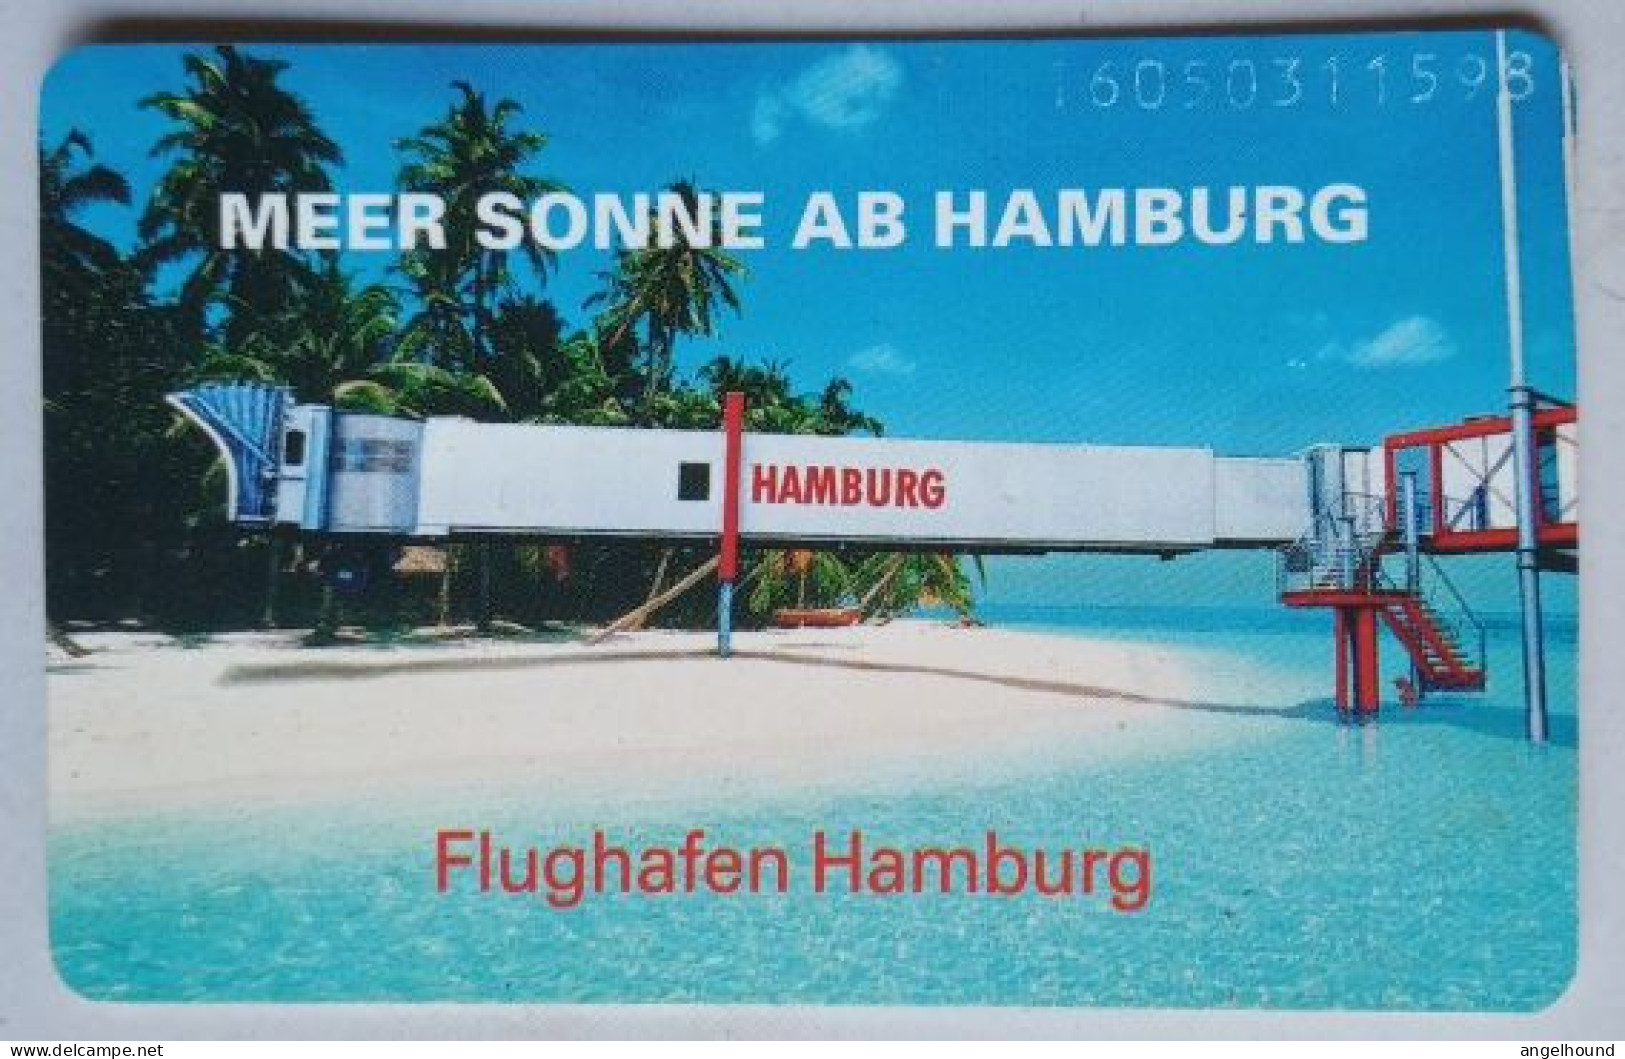 Germany 6 DM  MINT K 011 07.96 2500 Mintage - Flughafen Hamburg / Meer Sonneab Hamburg - K-Series : Serie Clientes